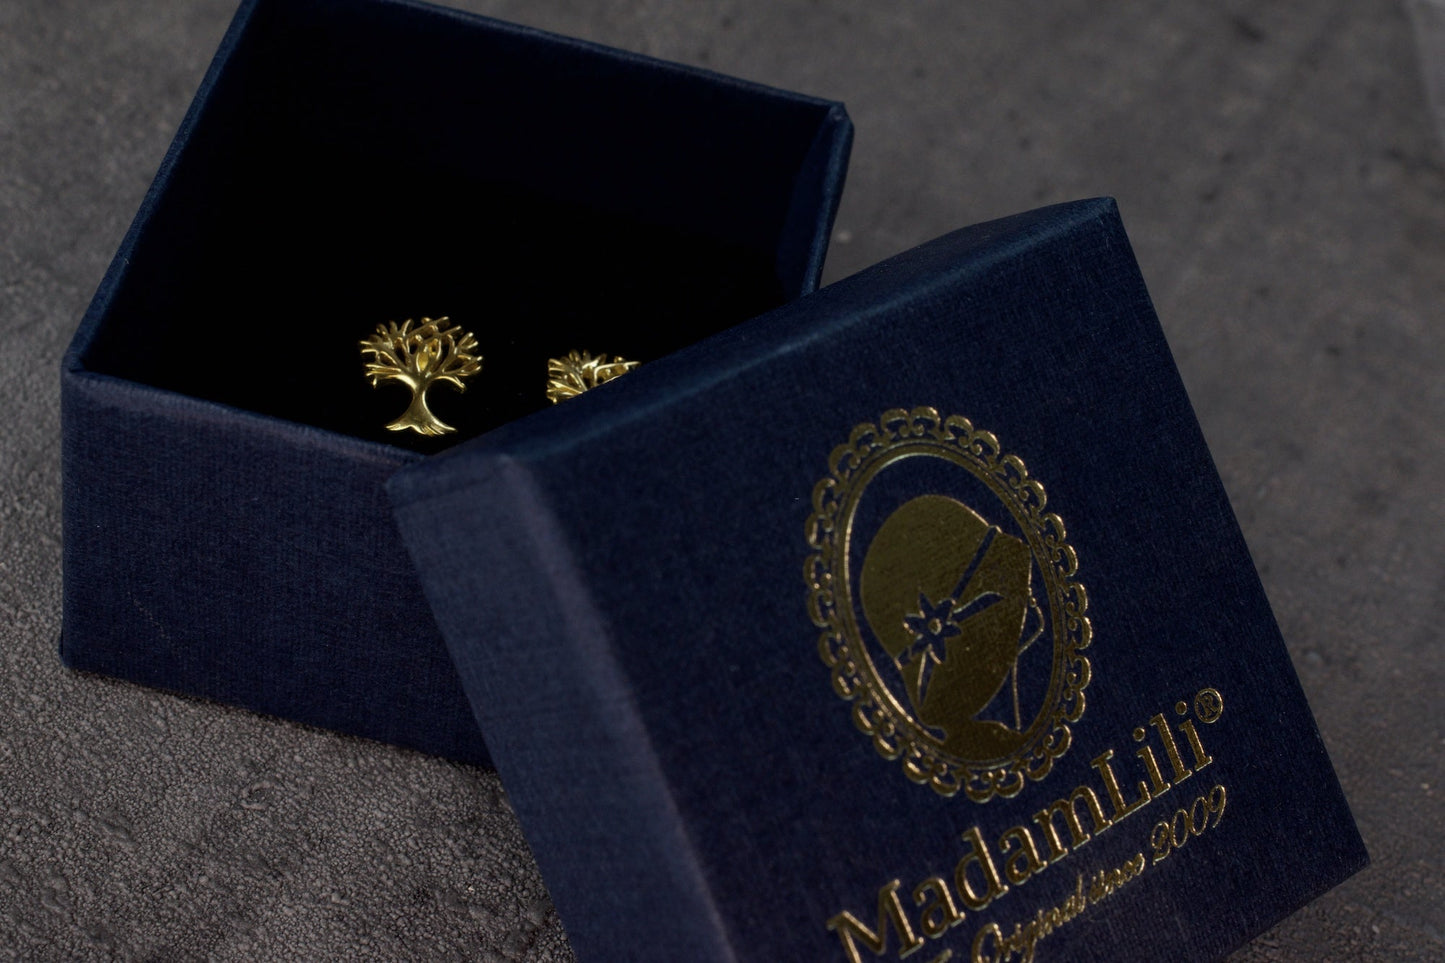 925 gold plated mini stud earrings "Lifebaum" - Ear925-109